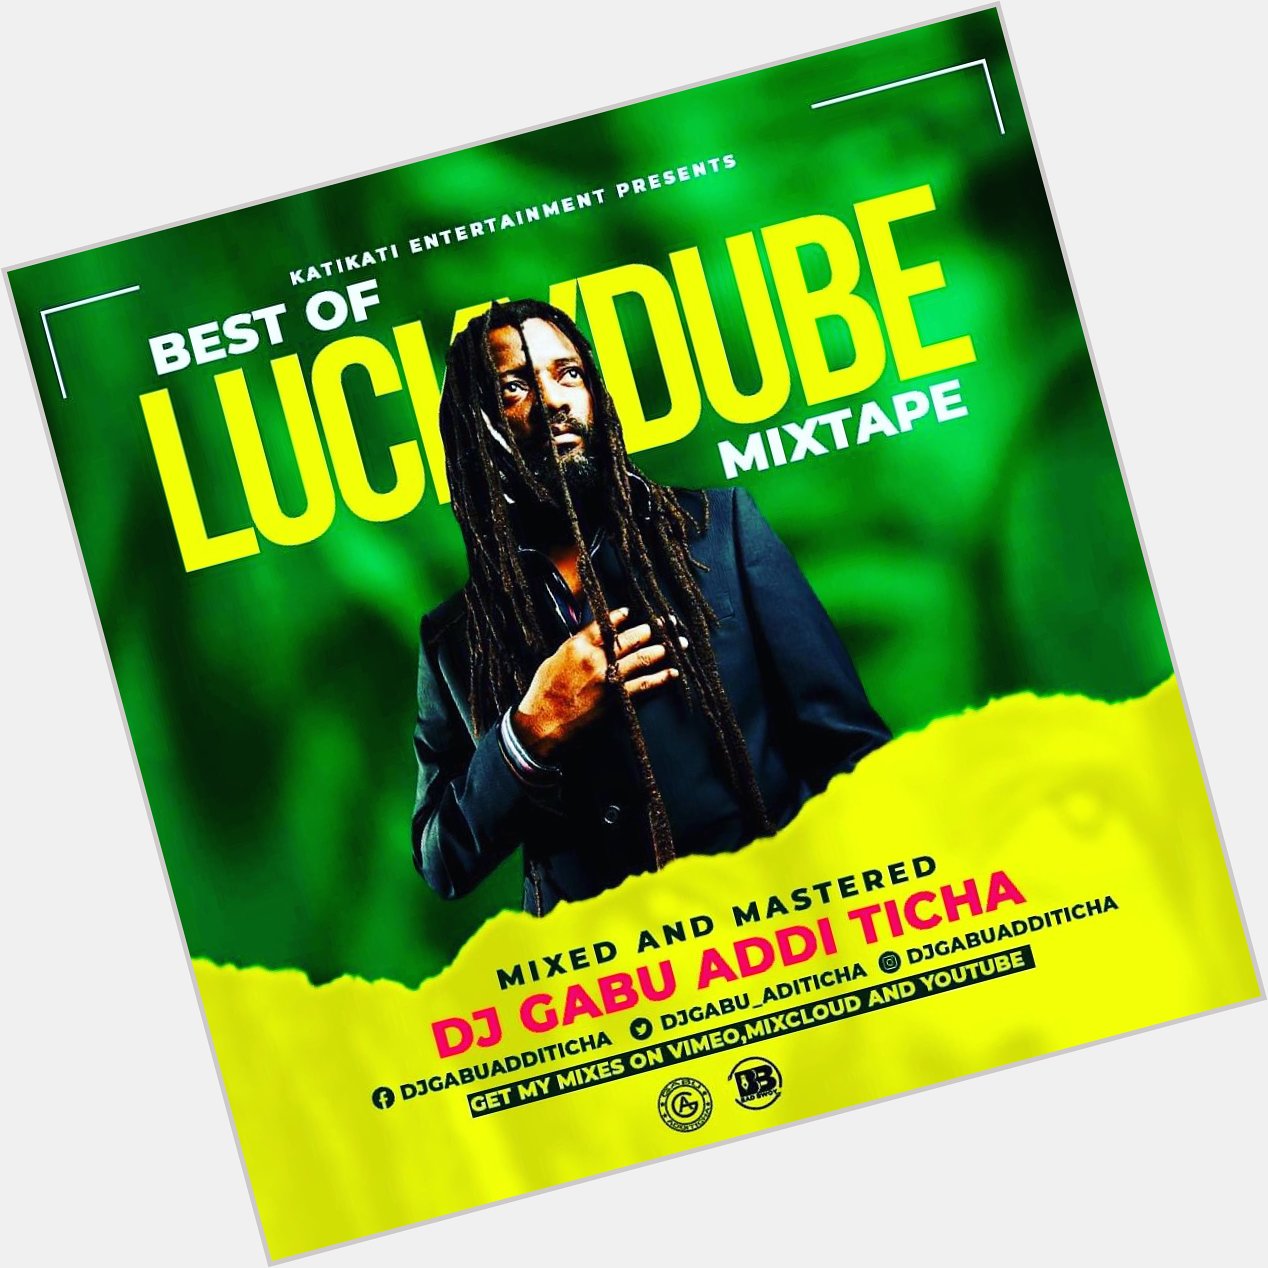 HAPPY BIRTHDAY LUCKY PHILIP DUBE.
Enjoy The best of lucky dube mixtape    